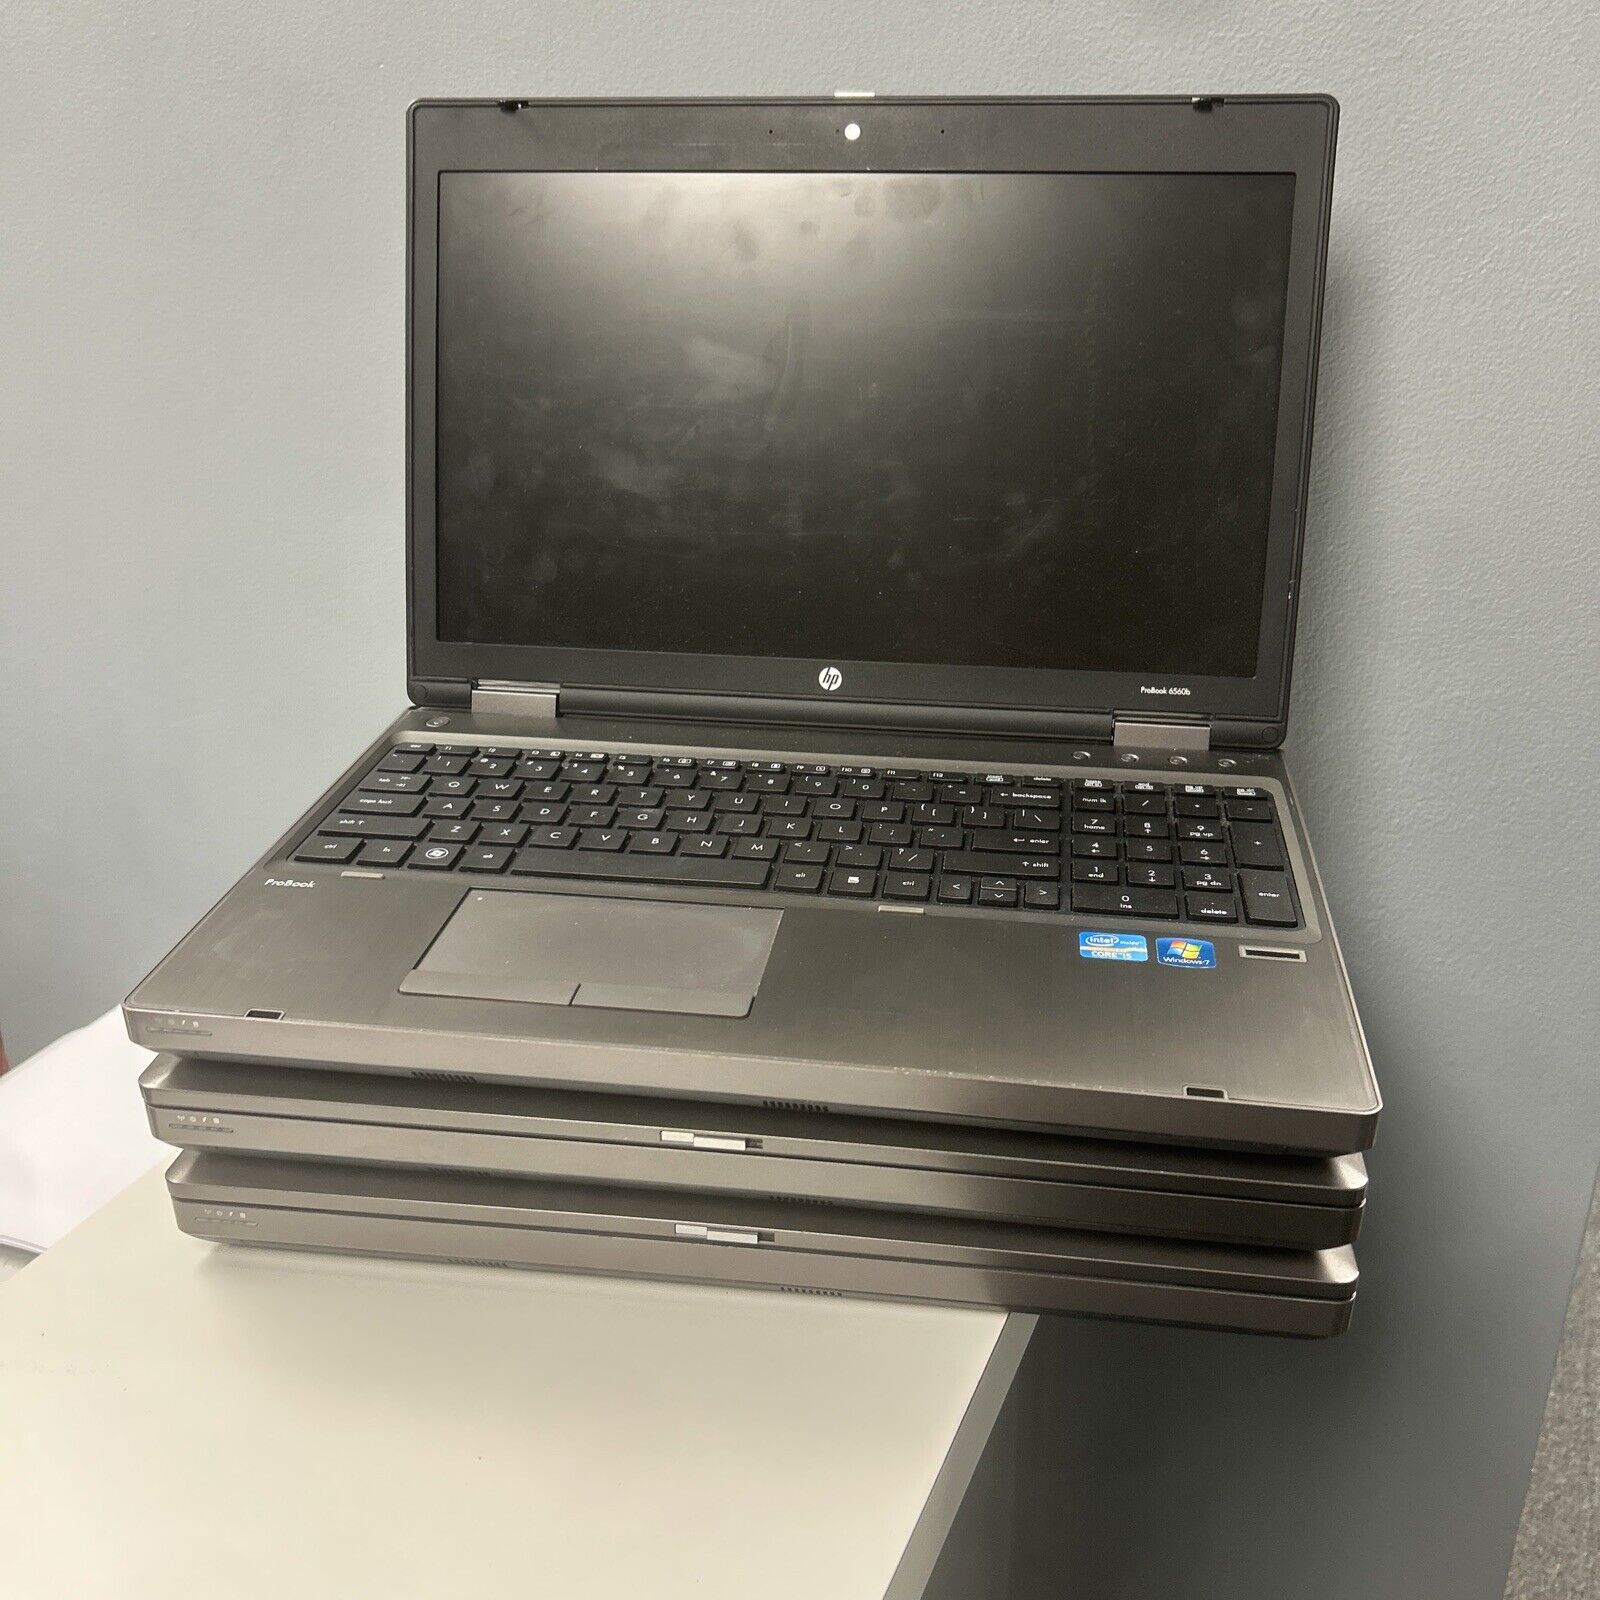 Lot of 3 HP ProBook 6560 i5 Laptops No HDD, No OS, NO RAM For Parts or Repair